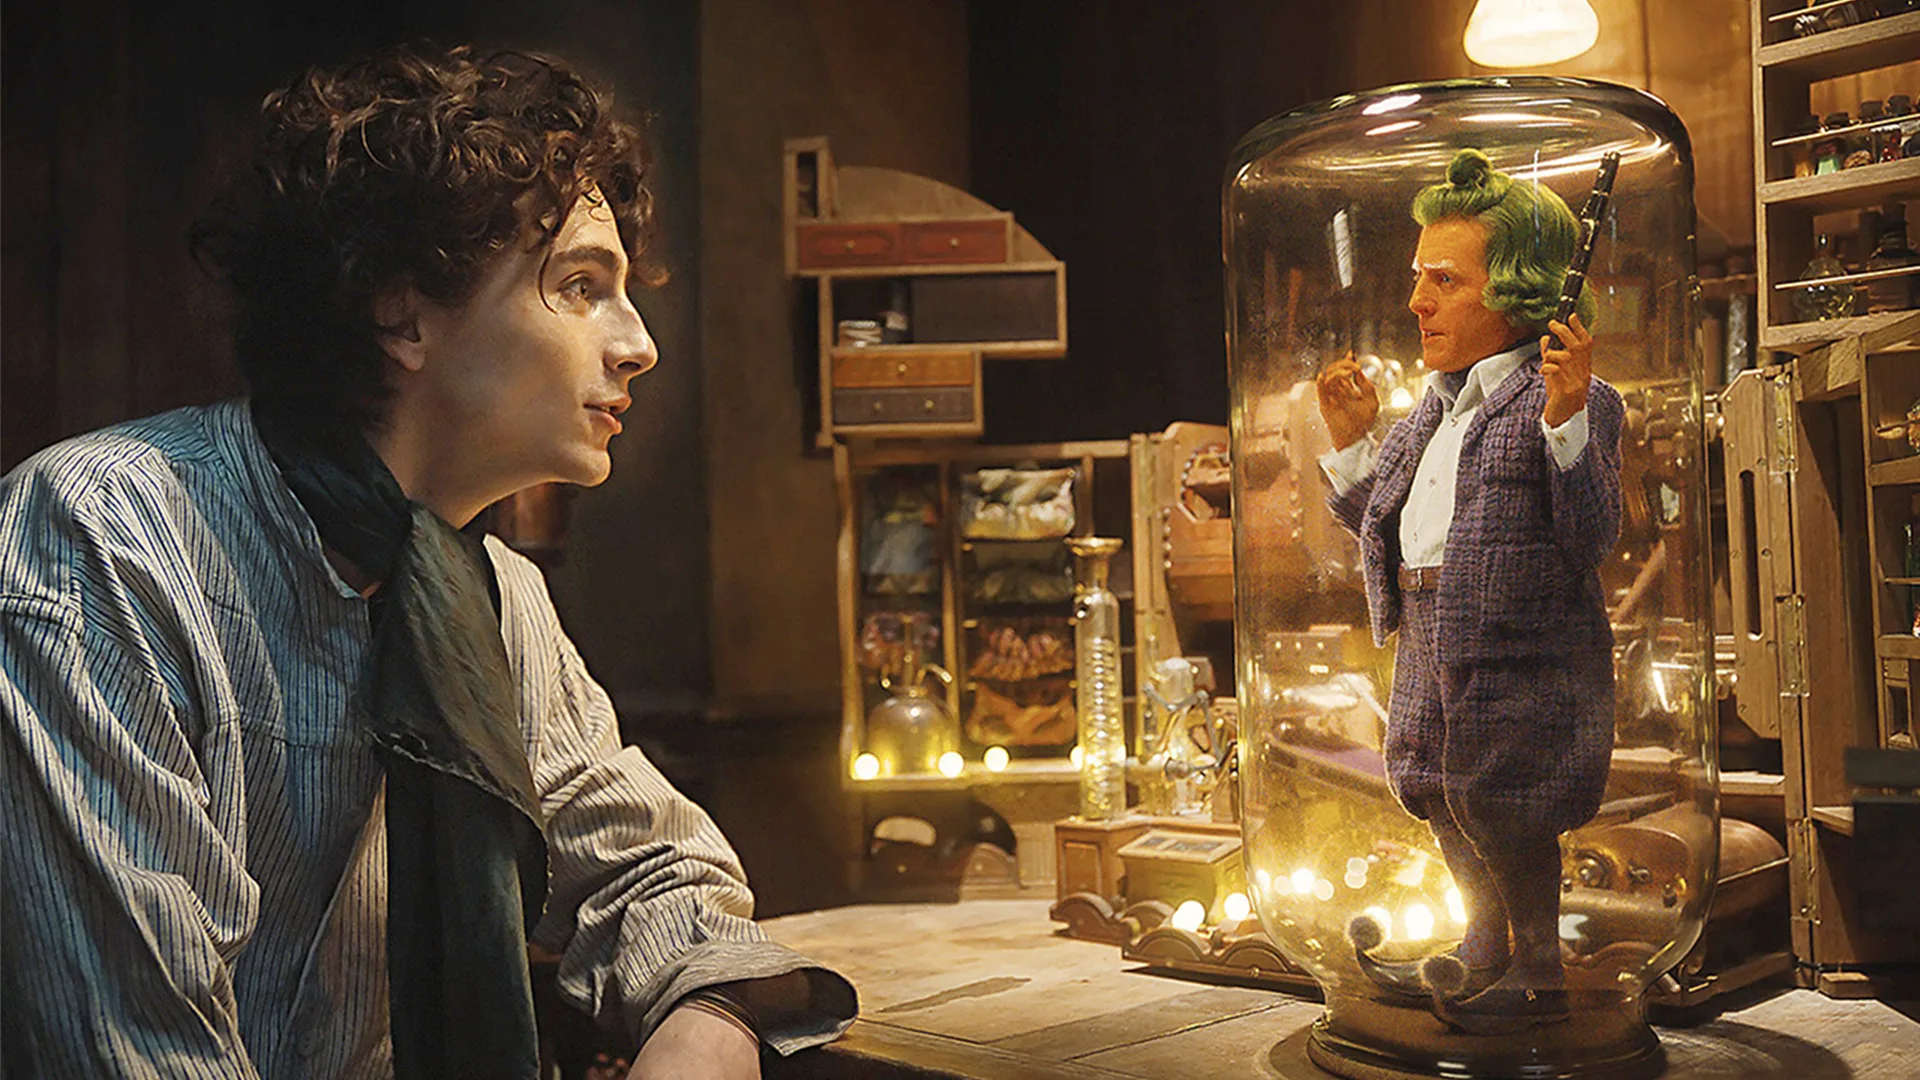 Wonka and Oompa Loompa in a jar in the film